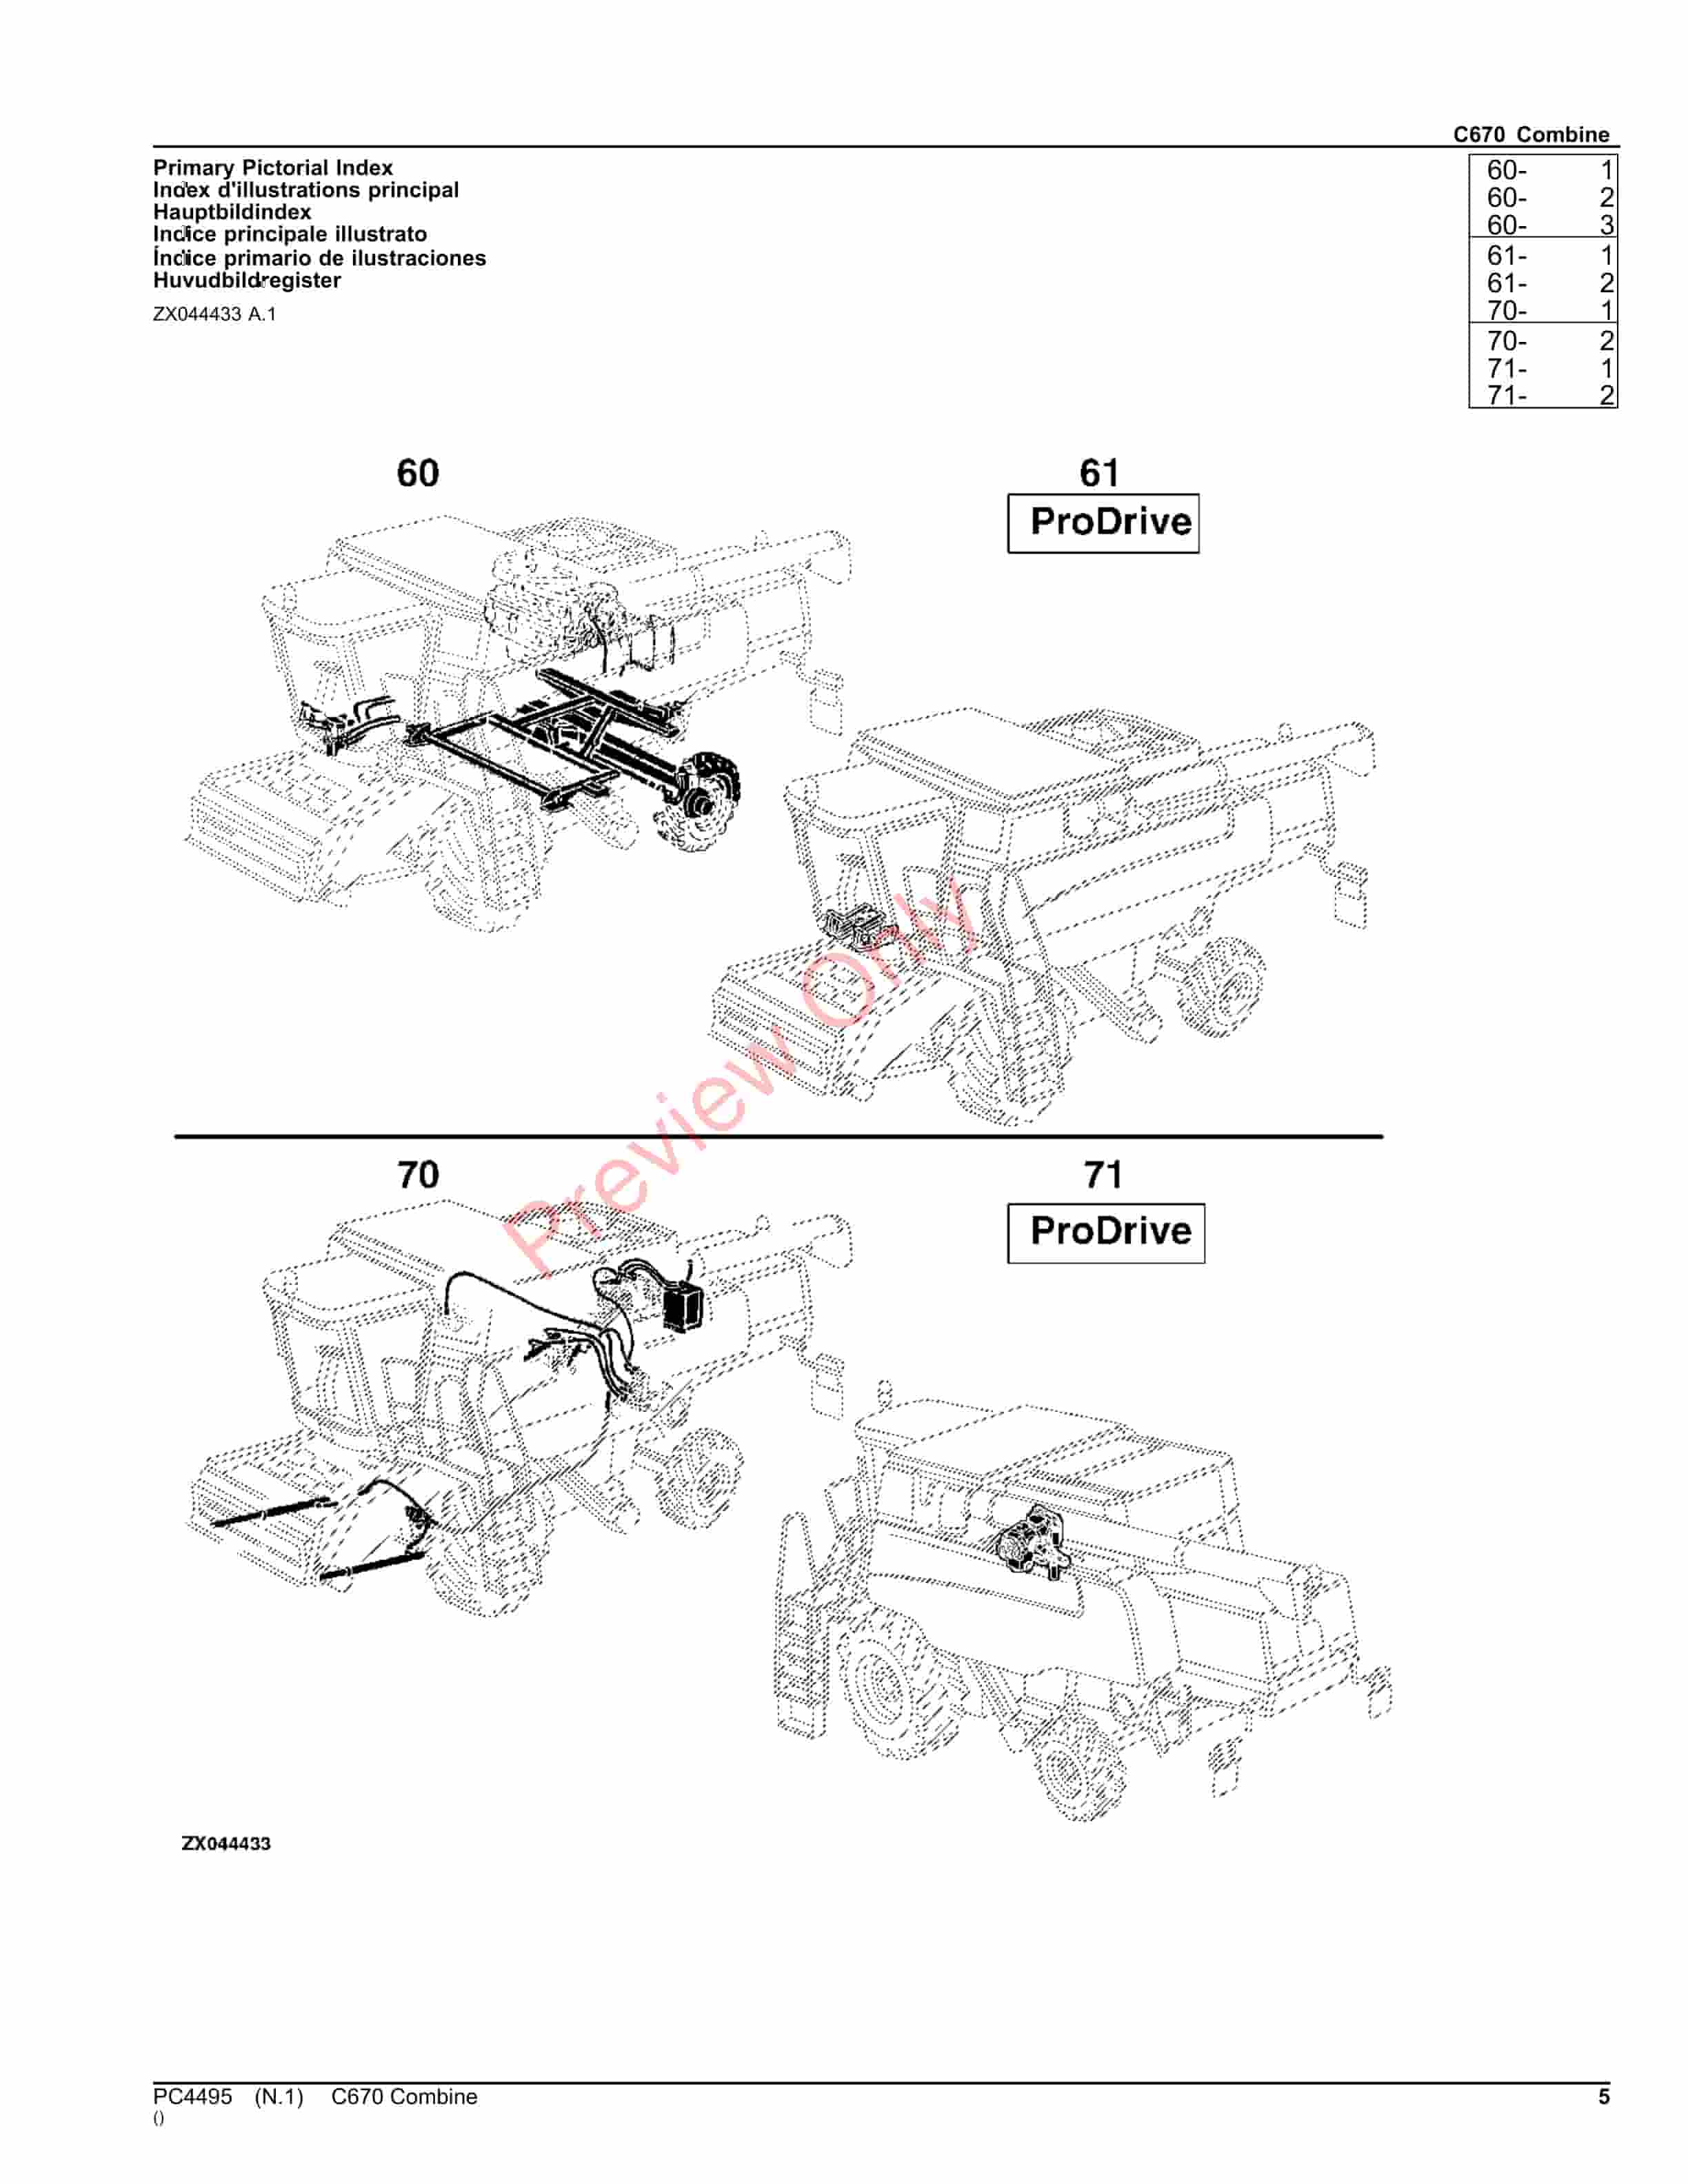 John Deere C670 COMBINE Parts Catalog PC4495 10SEP23-5